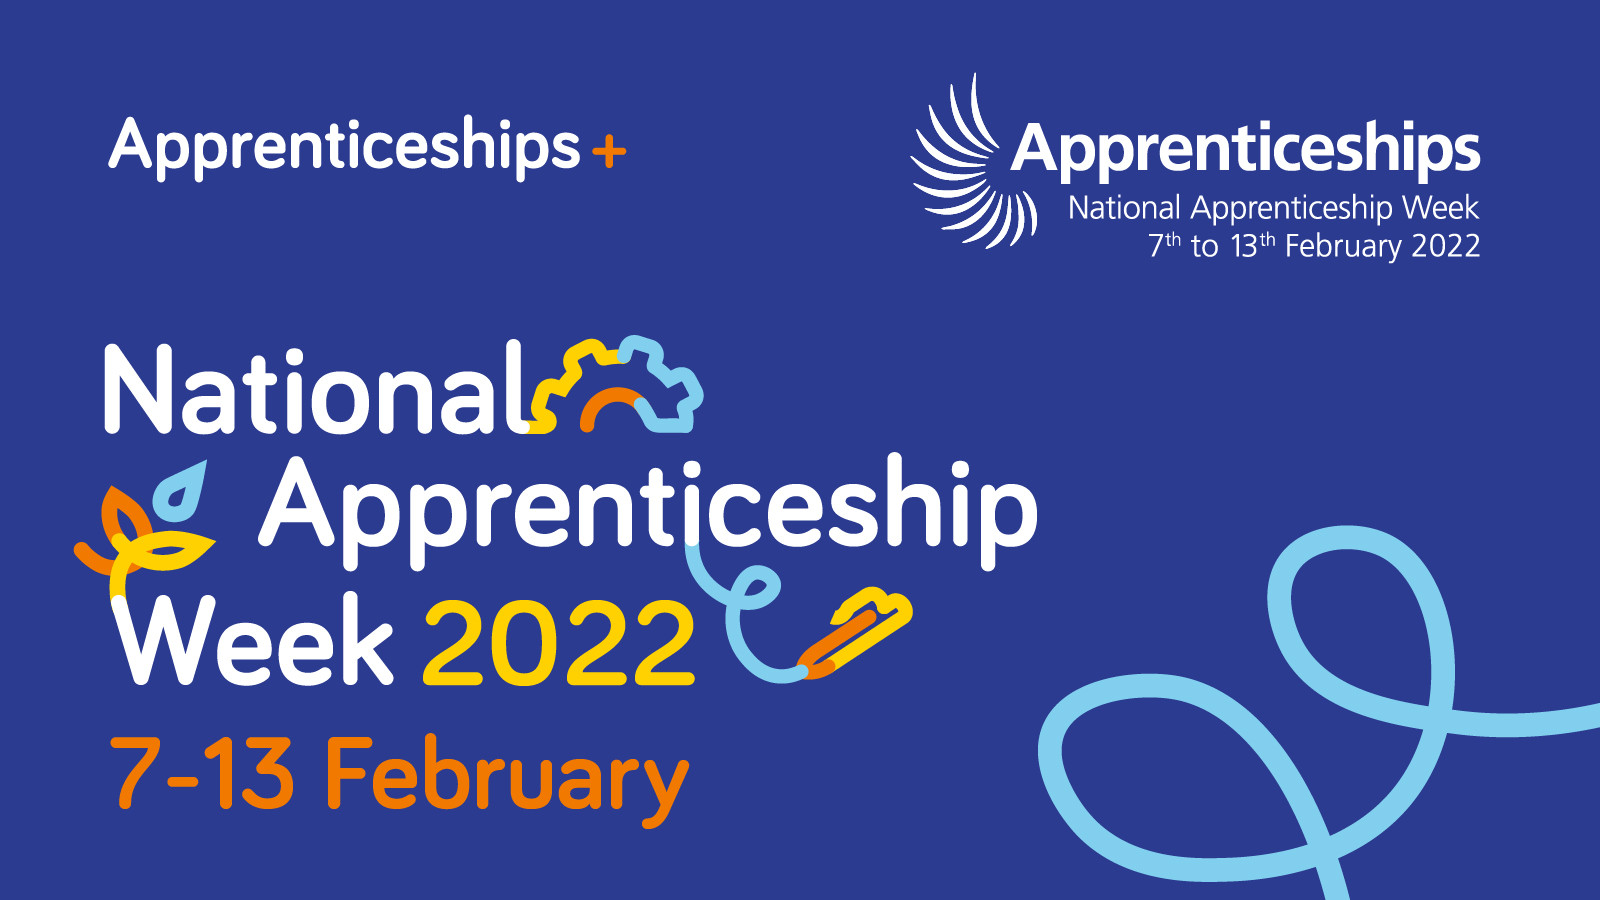 National Apprenticeship Week 2022 image